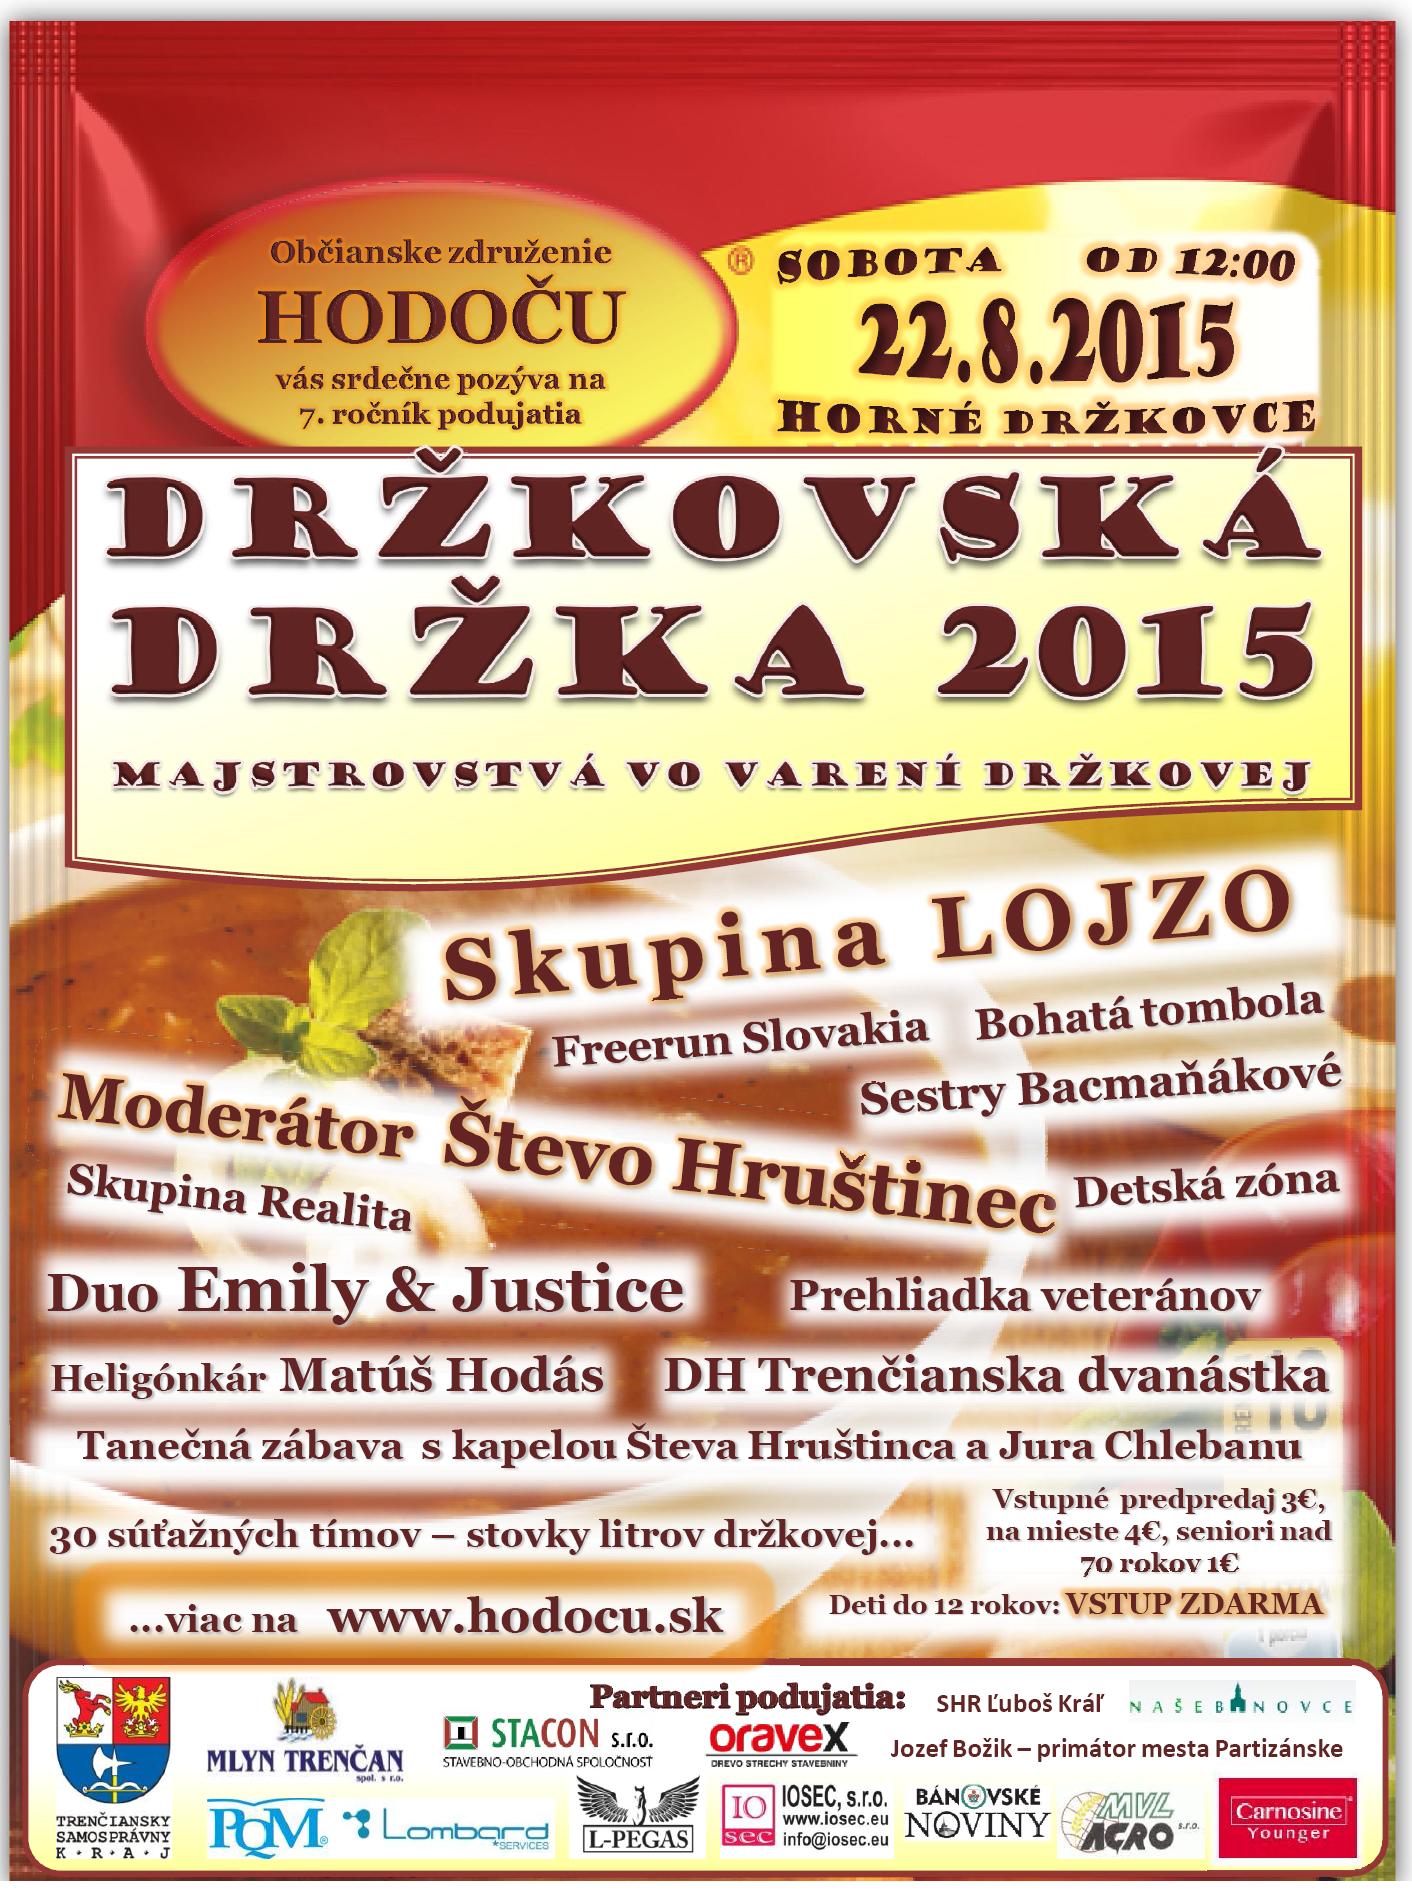 Držkovská držka 2015 - 7. ročník